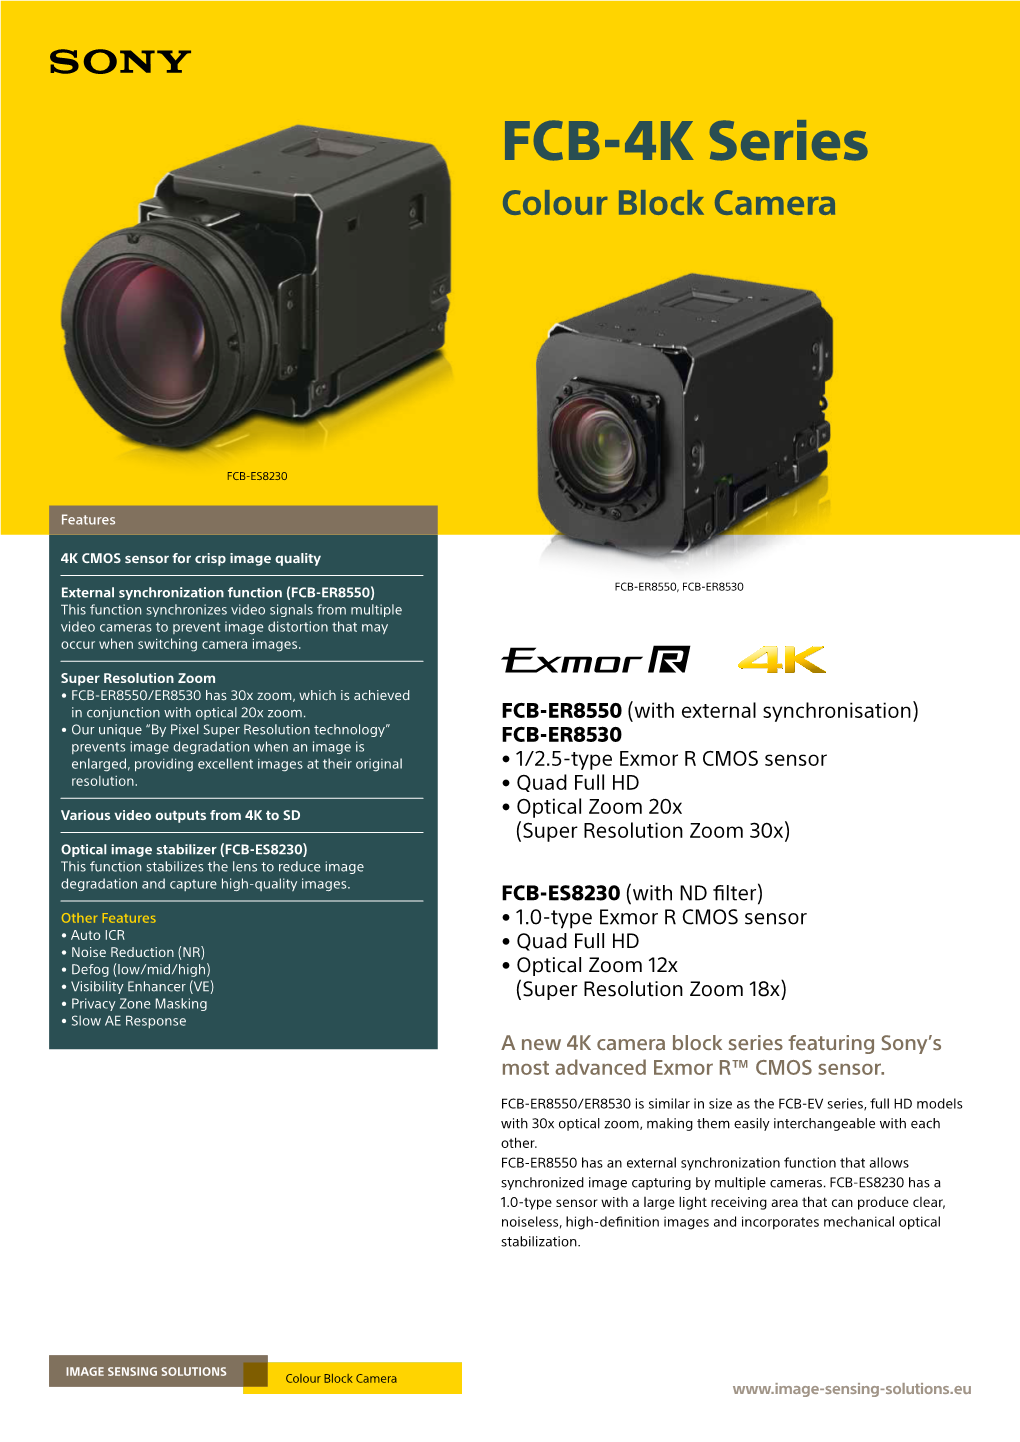 FCB-4K Series Colour Block Camera